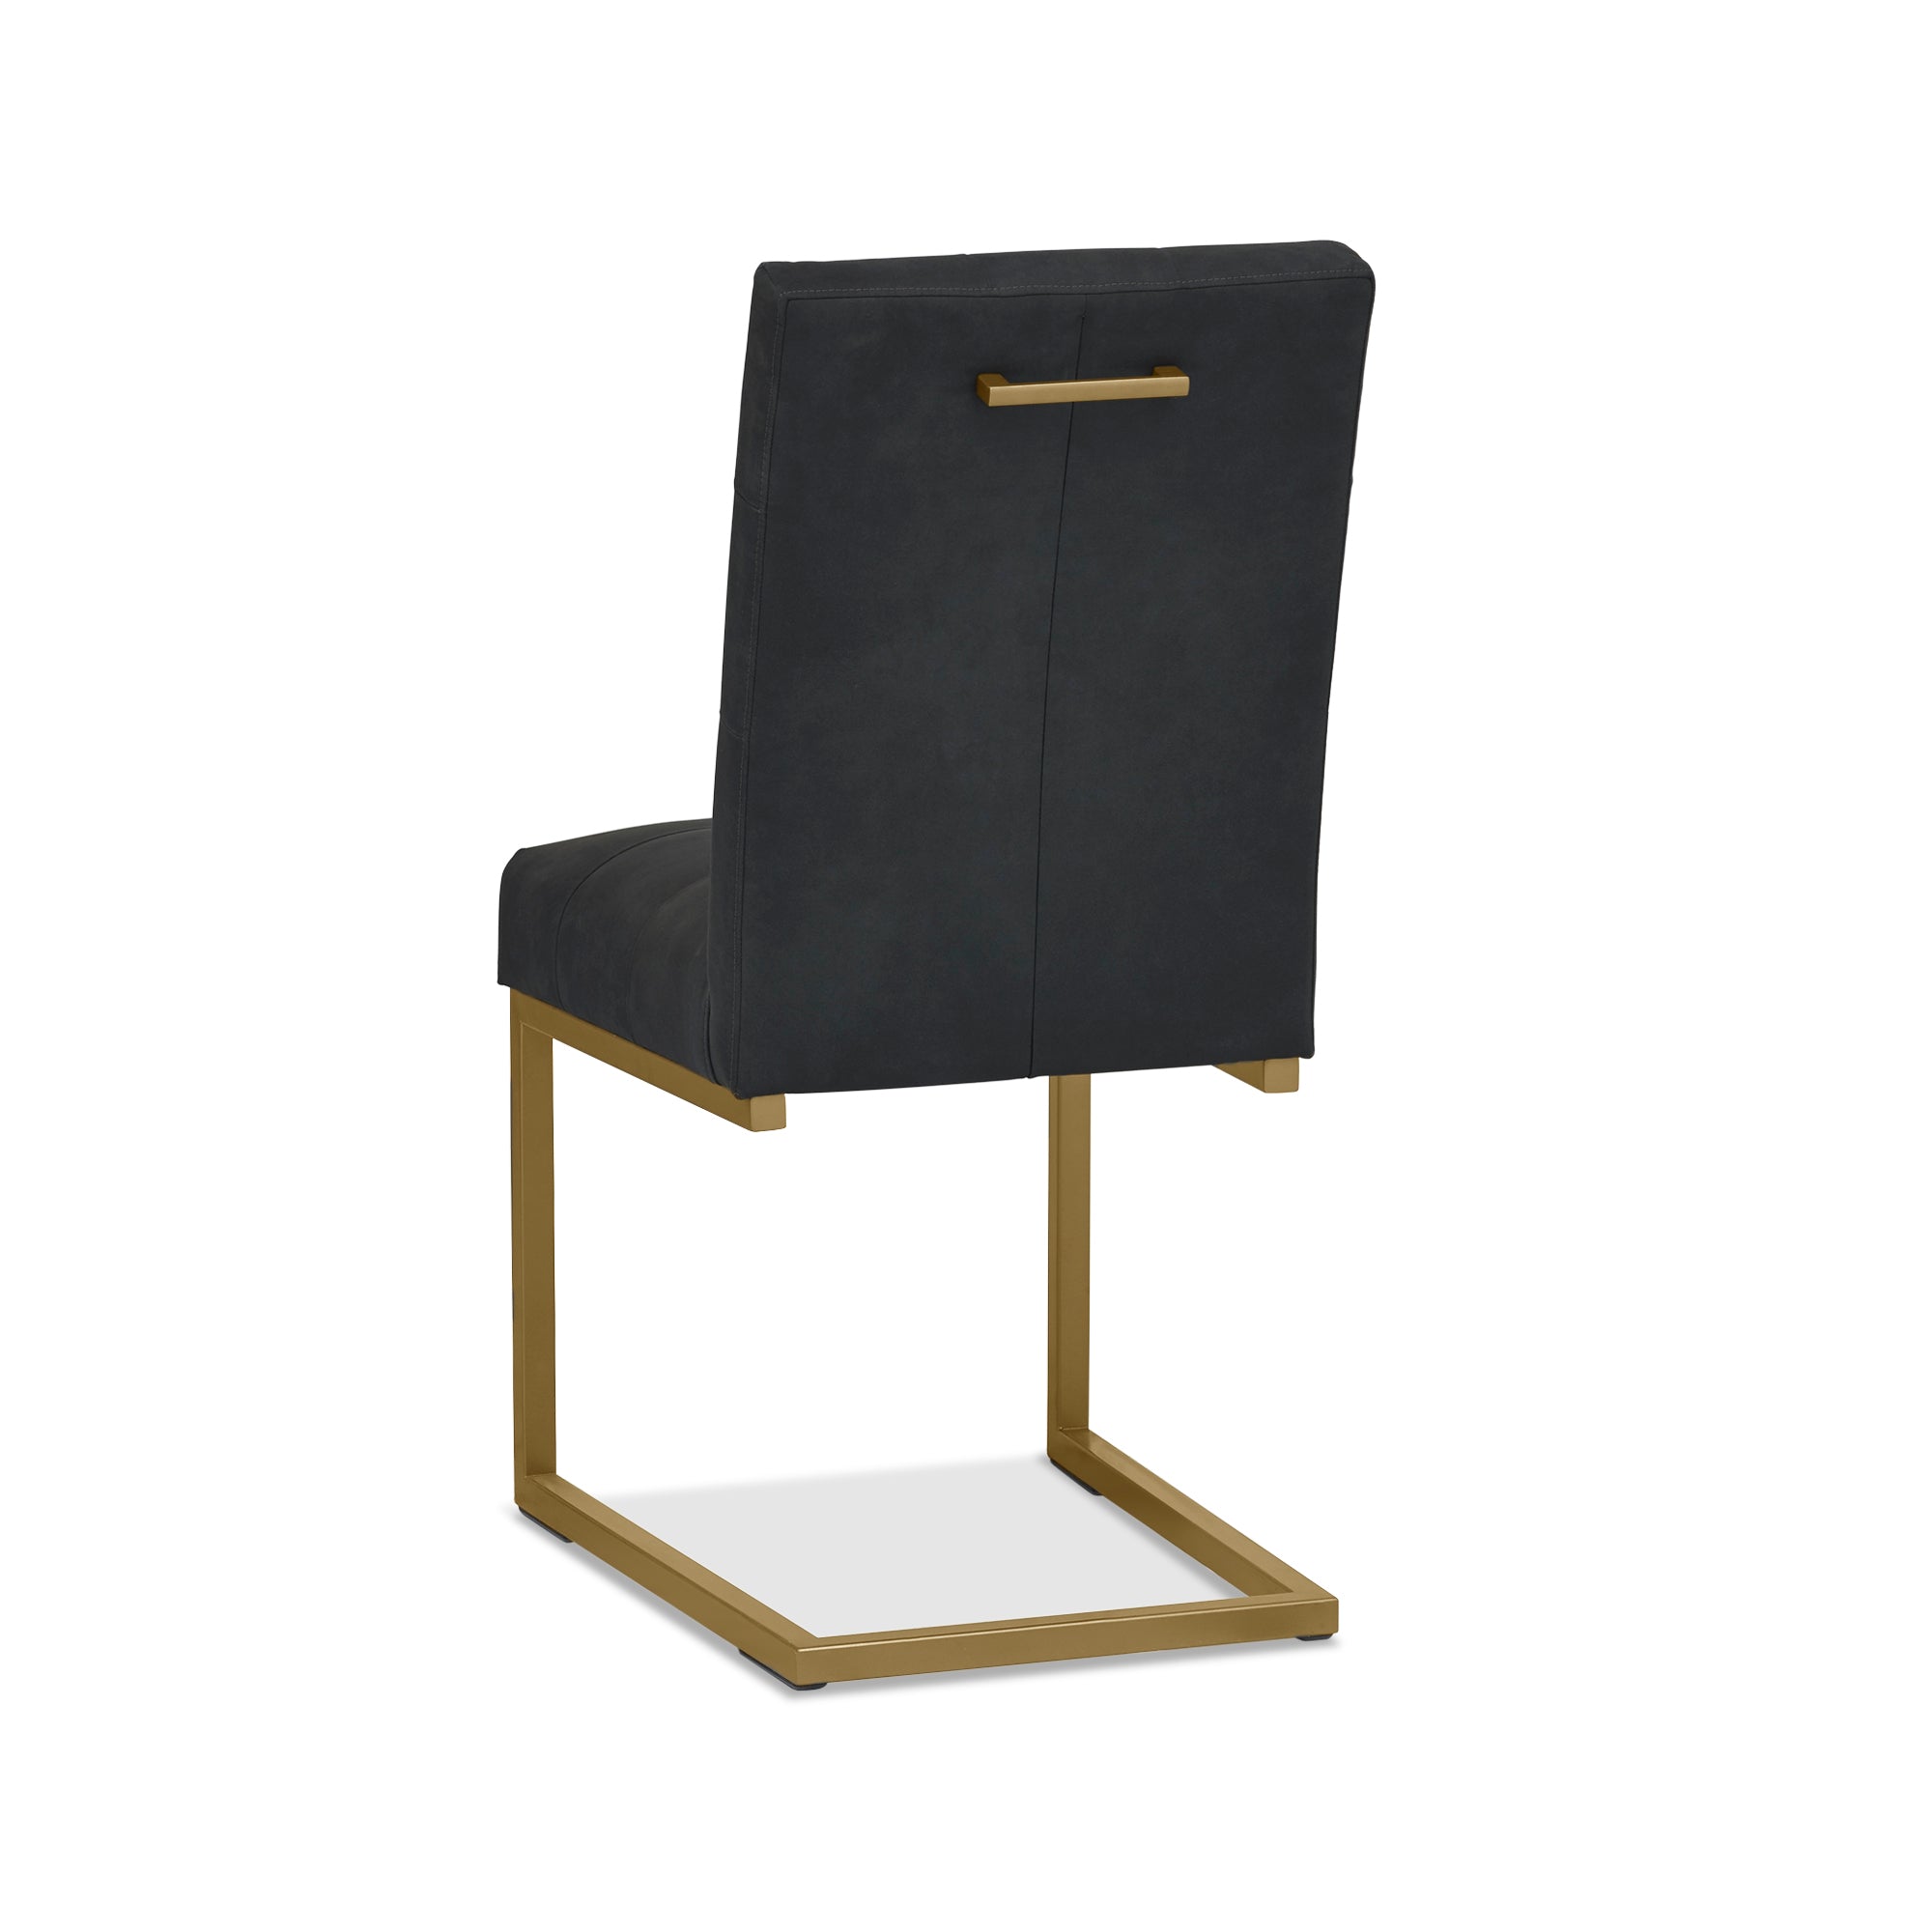 Lindos Fumed Oak Upholstered Cantilever Chair - Black Fabric